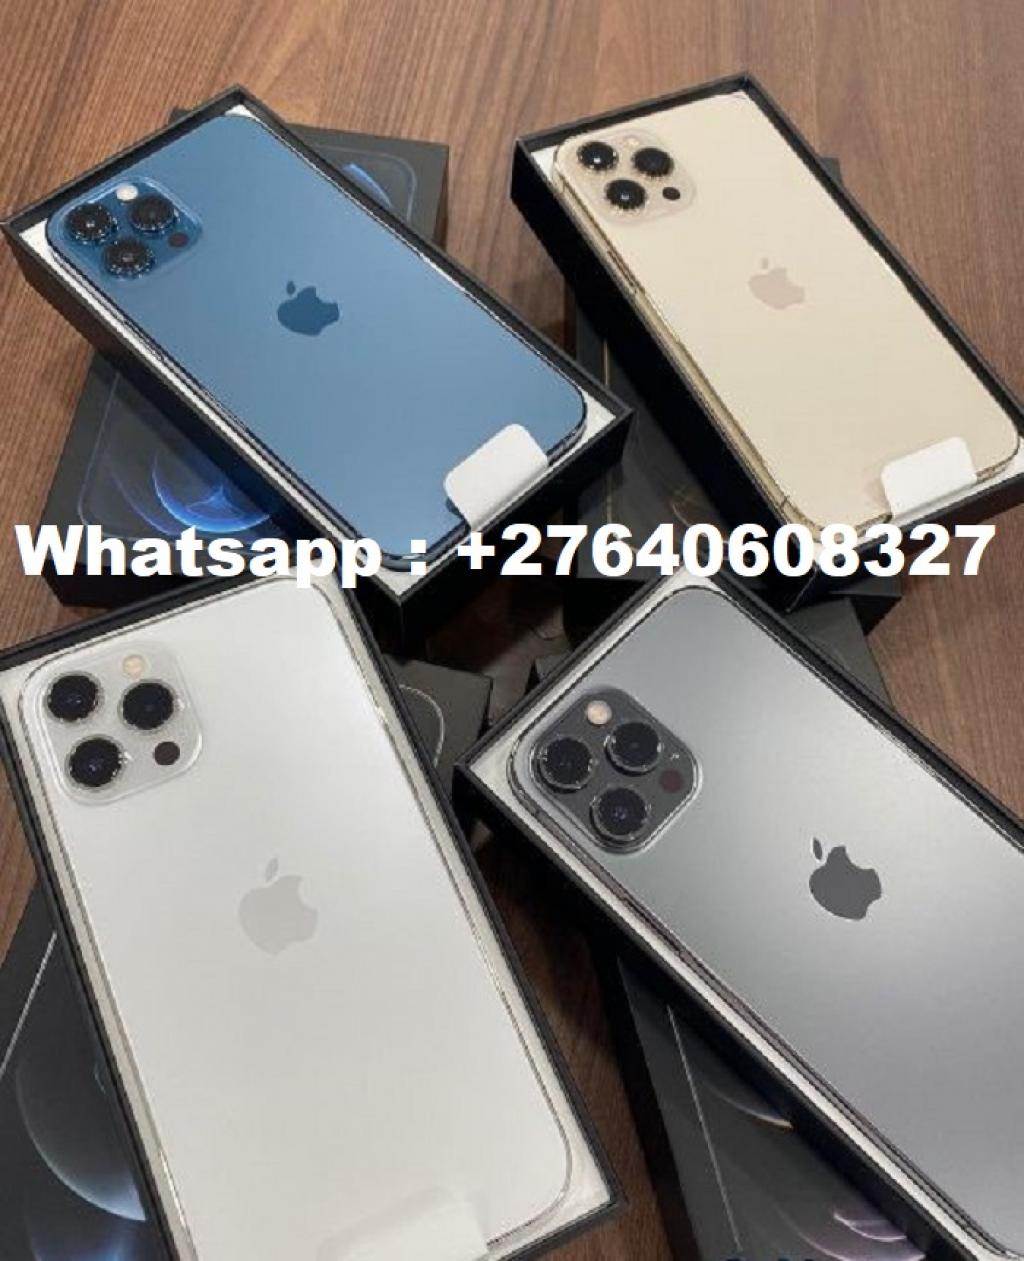 Apple iPhone 12 Pro, iPhone 12 Pro Max, iPhone 12